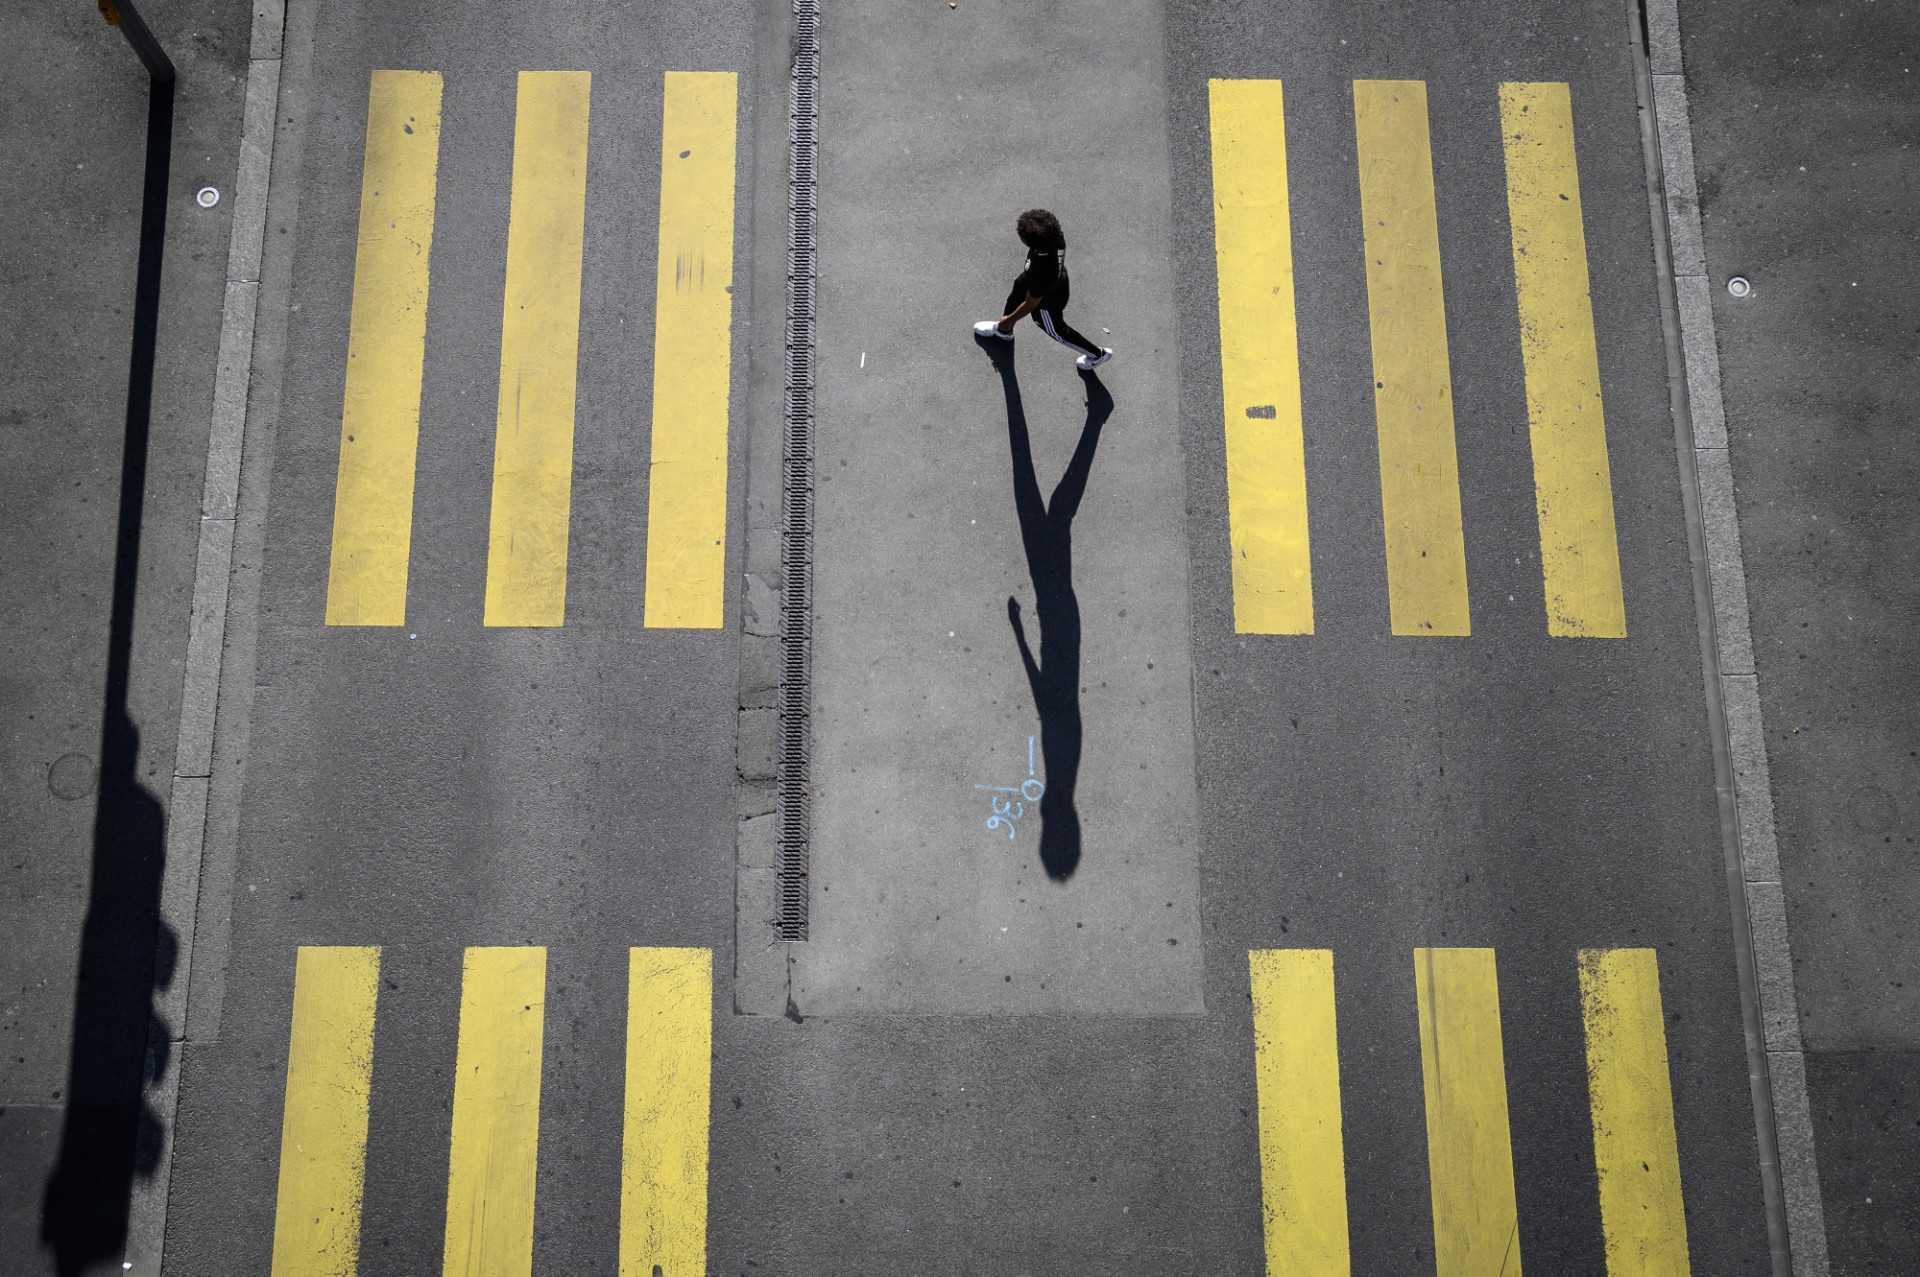 A pedestrian walks on a pedestrian crossing in Lausanne, Switzerland, on Aug 18, 2020. Photo: AFP